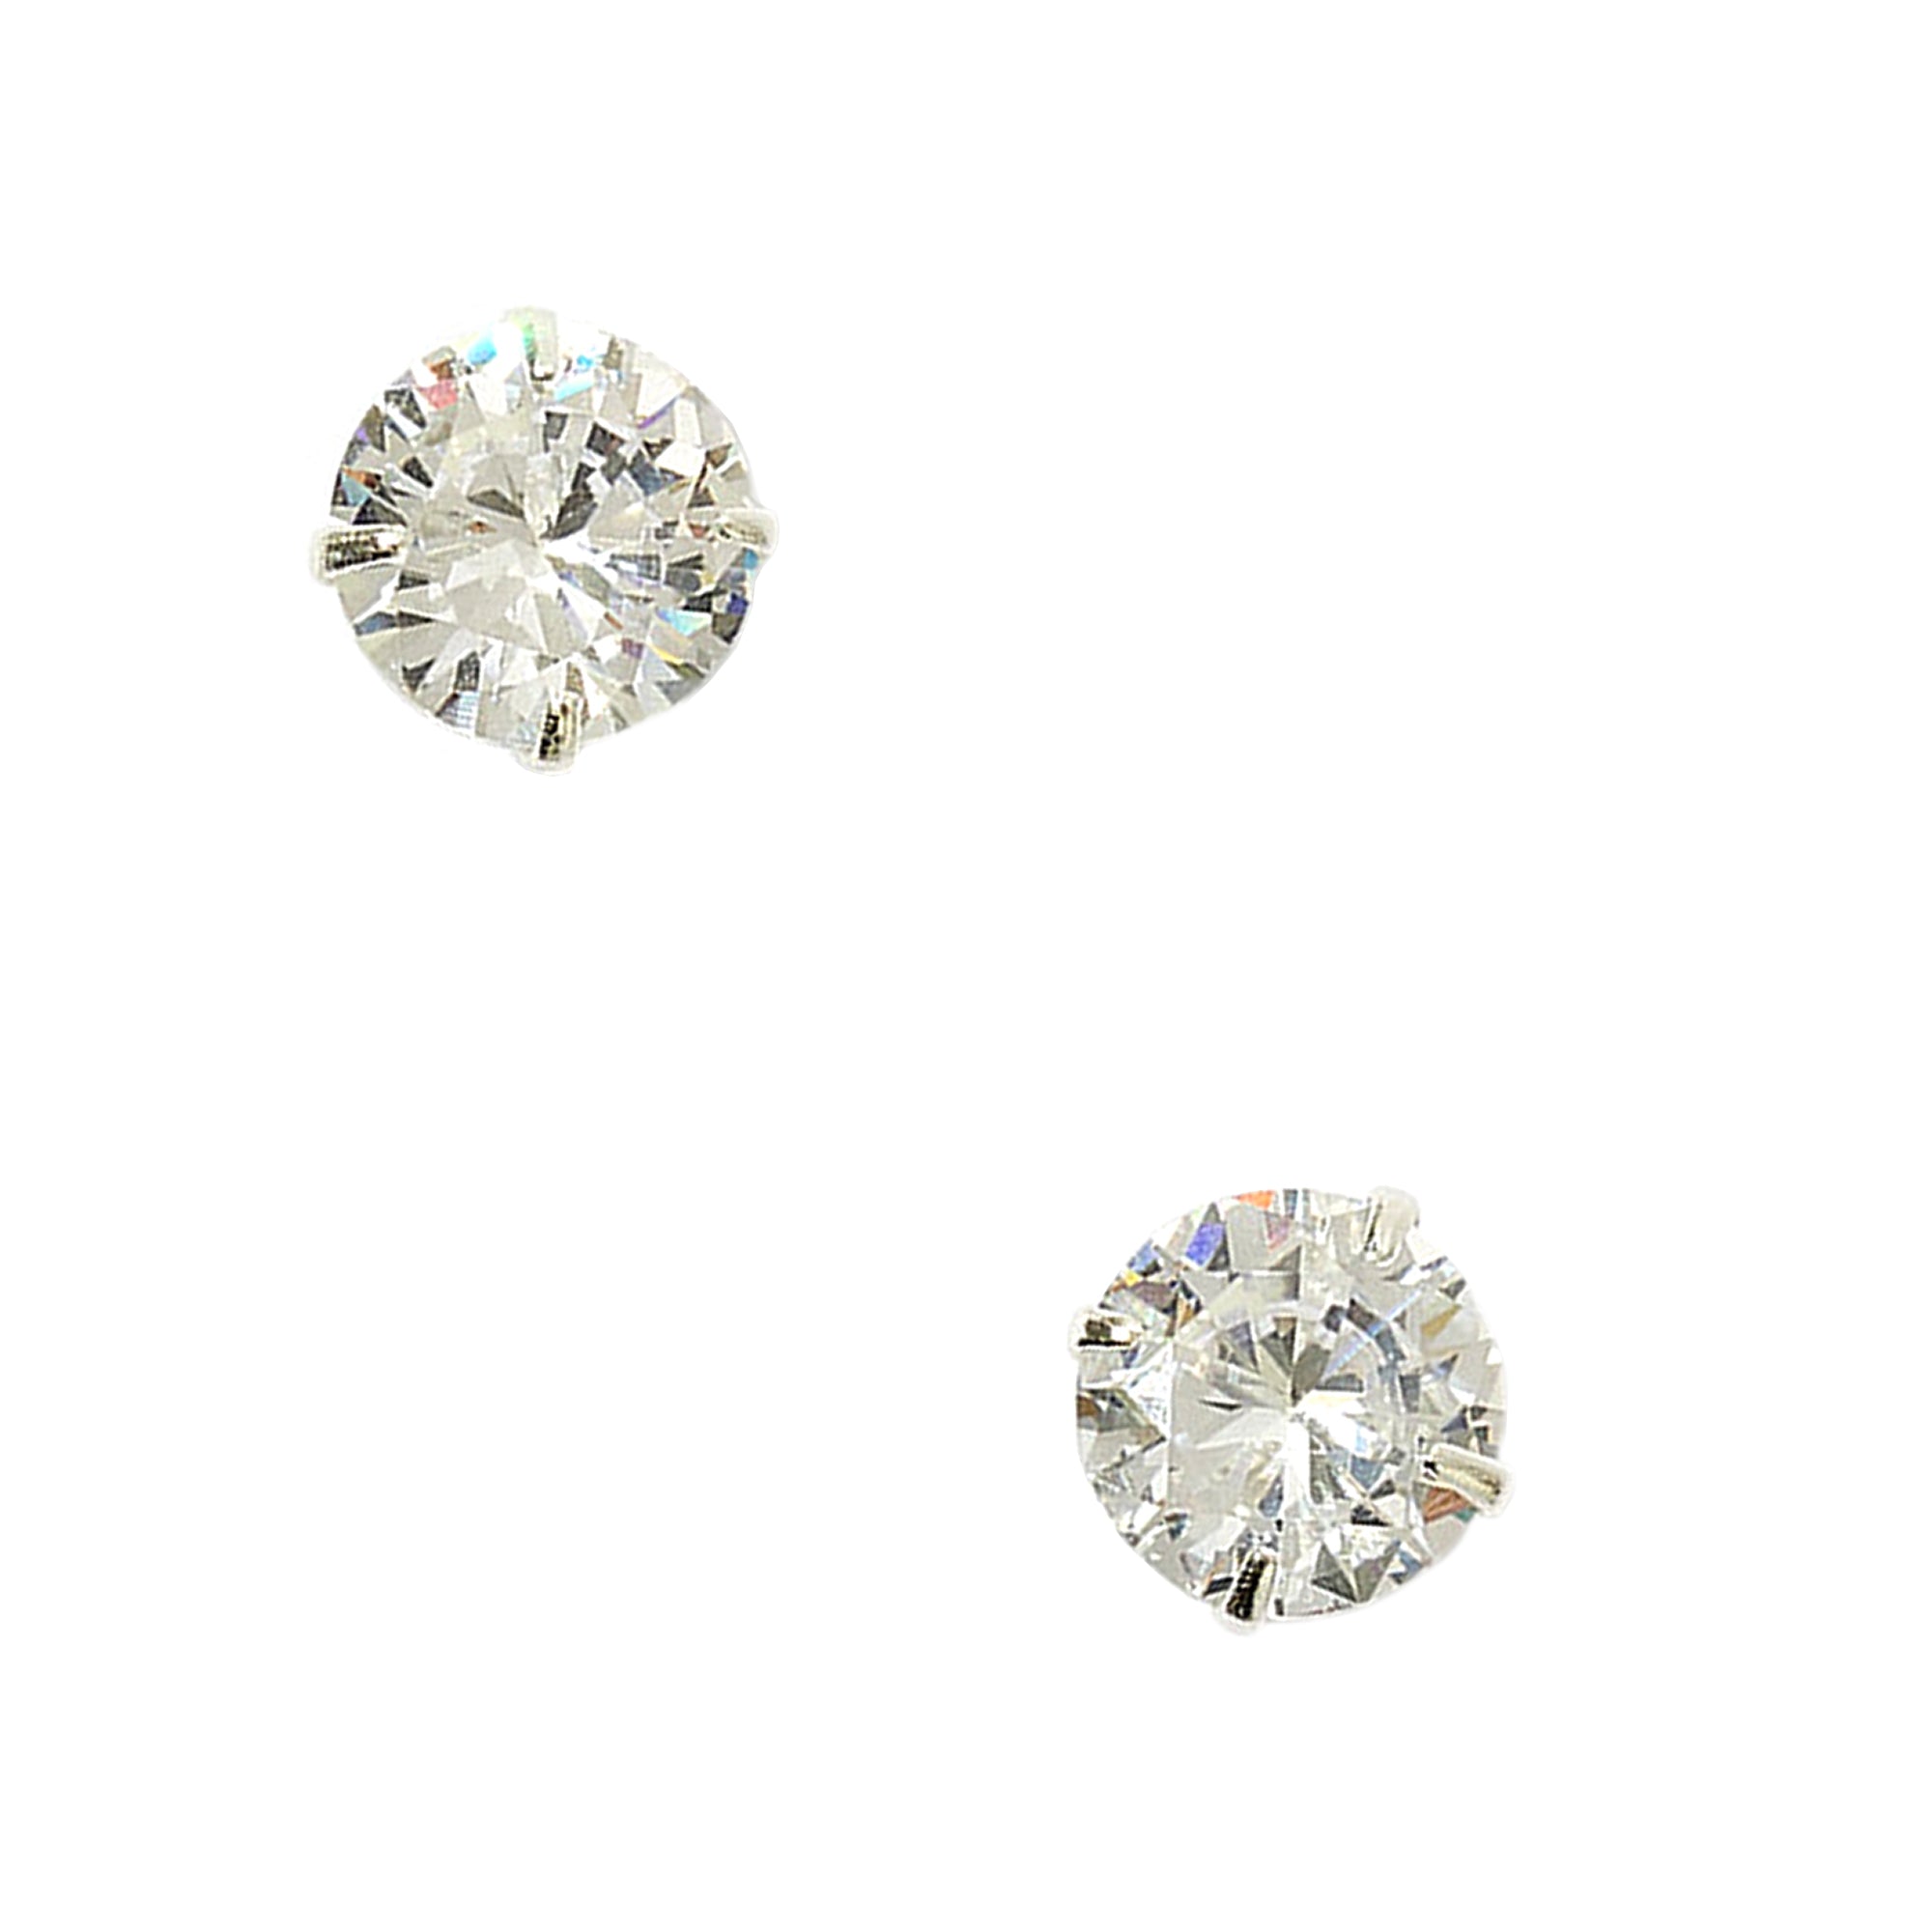 Buy 925 Sterling Silver Earrings With Pearl - Earrings for Women Online at  Silvermerc | SME_2715 – Silvermerc Designs